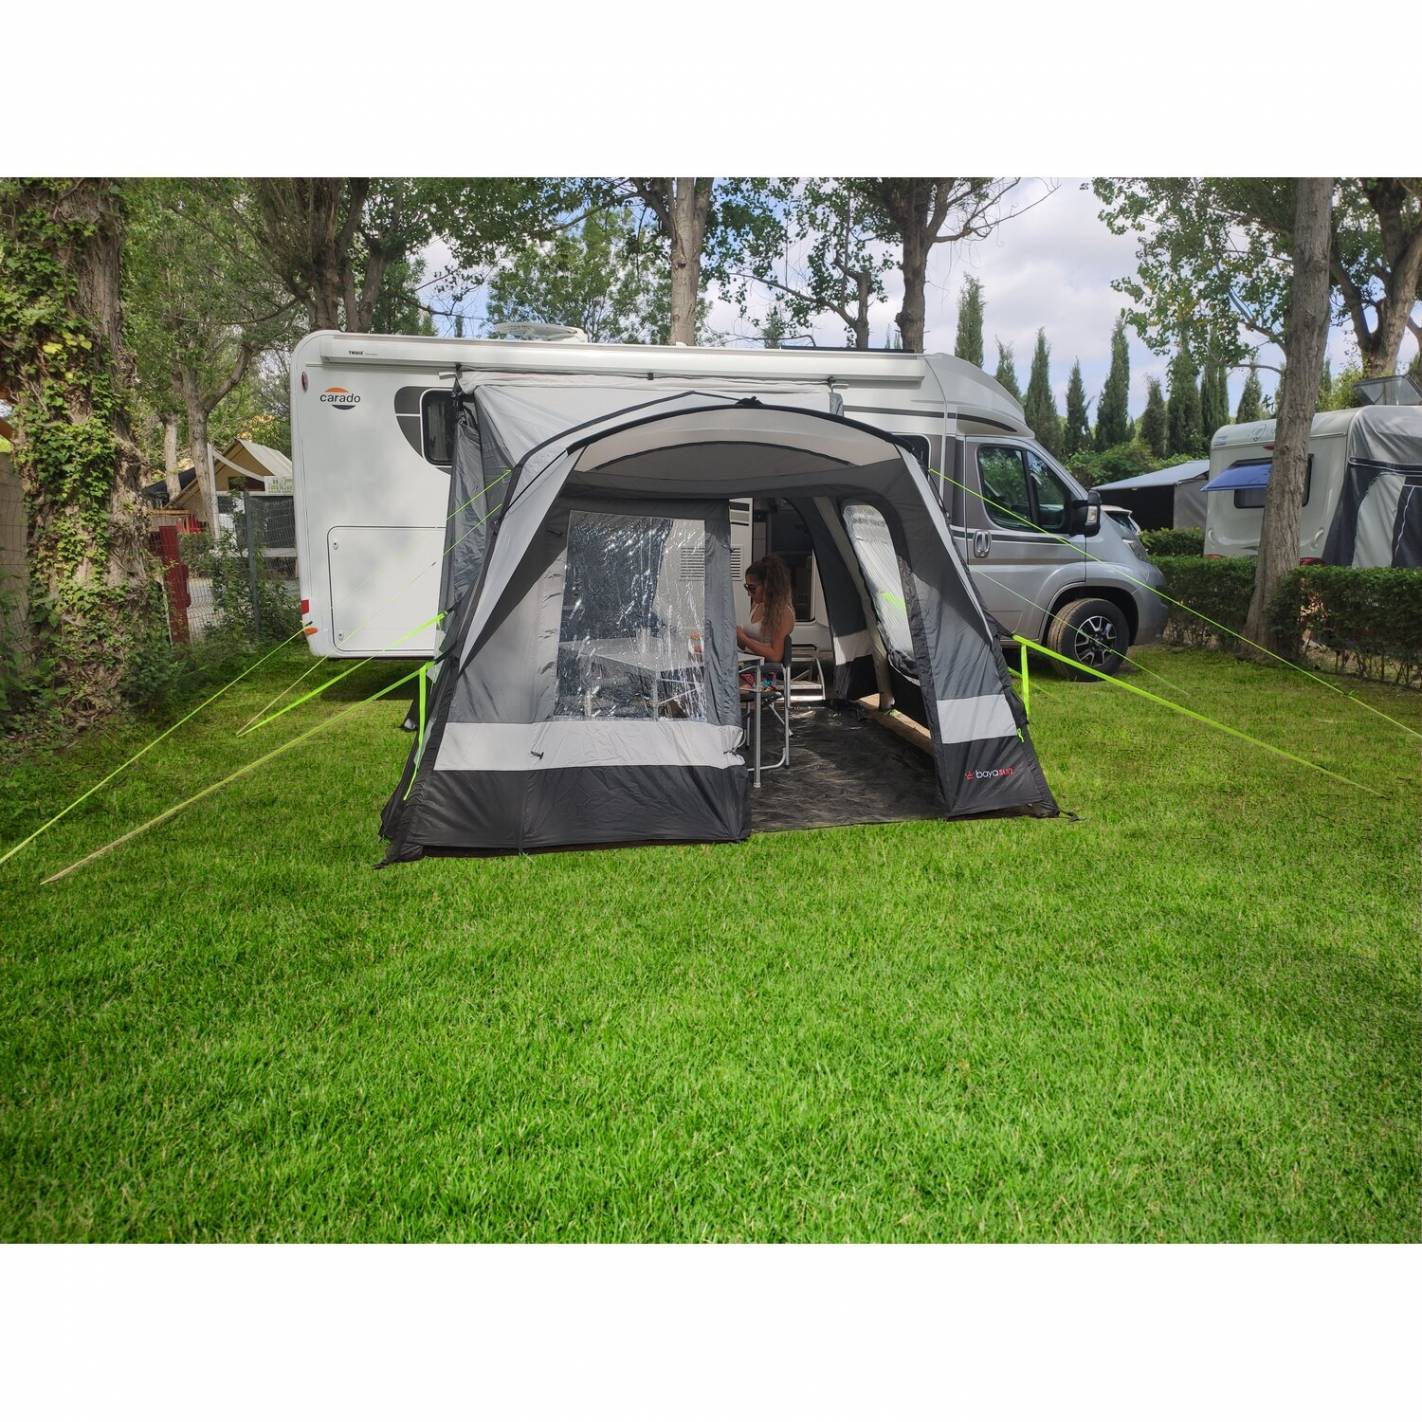 Auvent gonflable Bora Air pour camping-car – Just4Camper Baya Sun